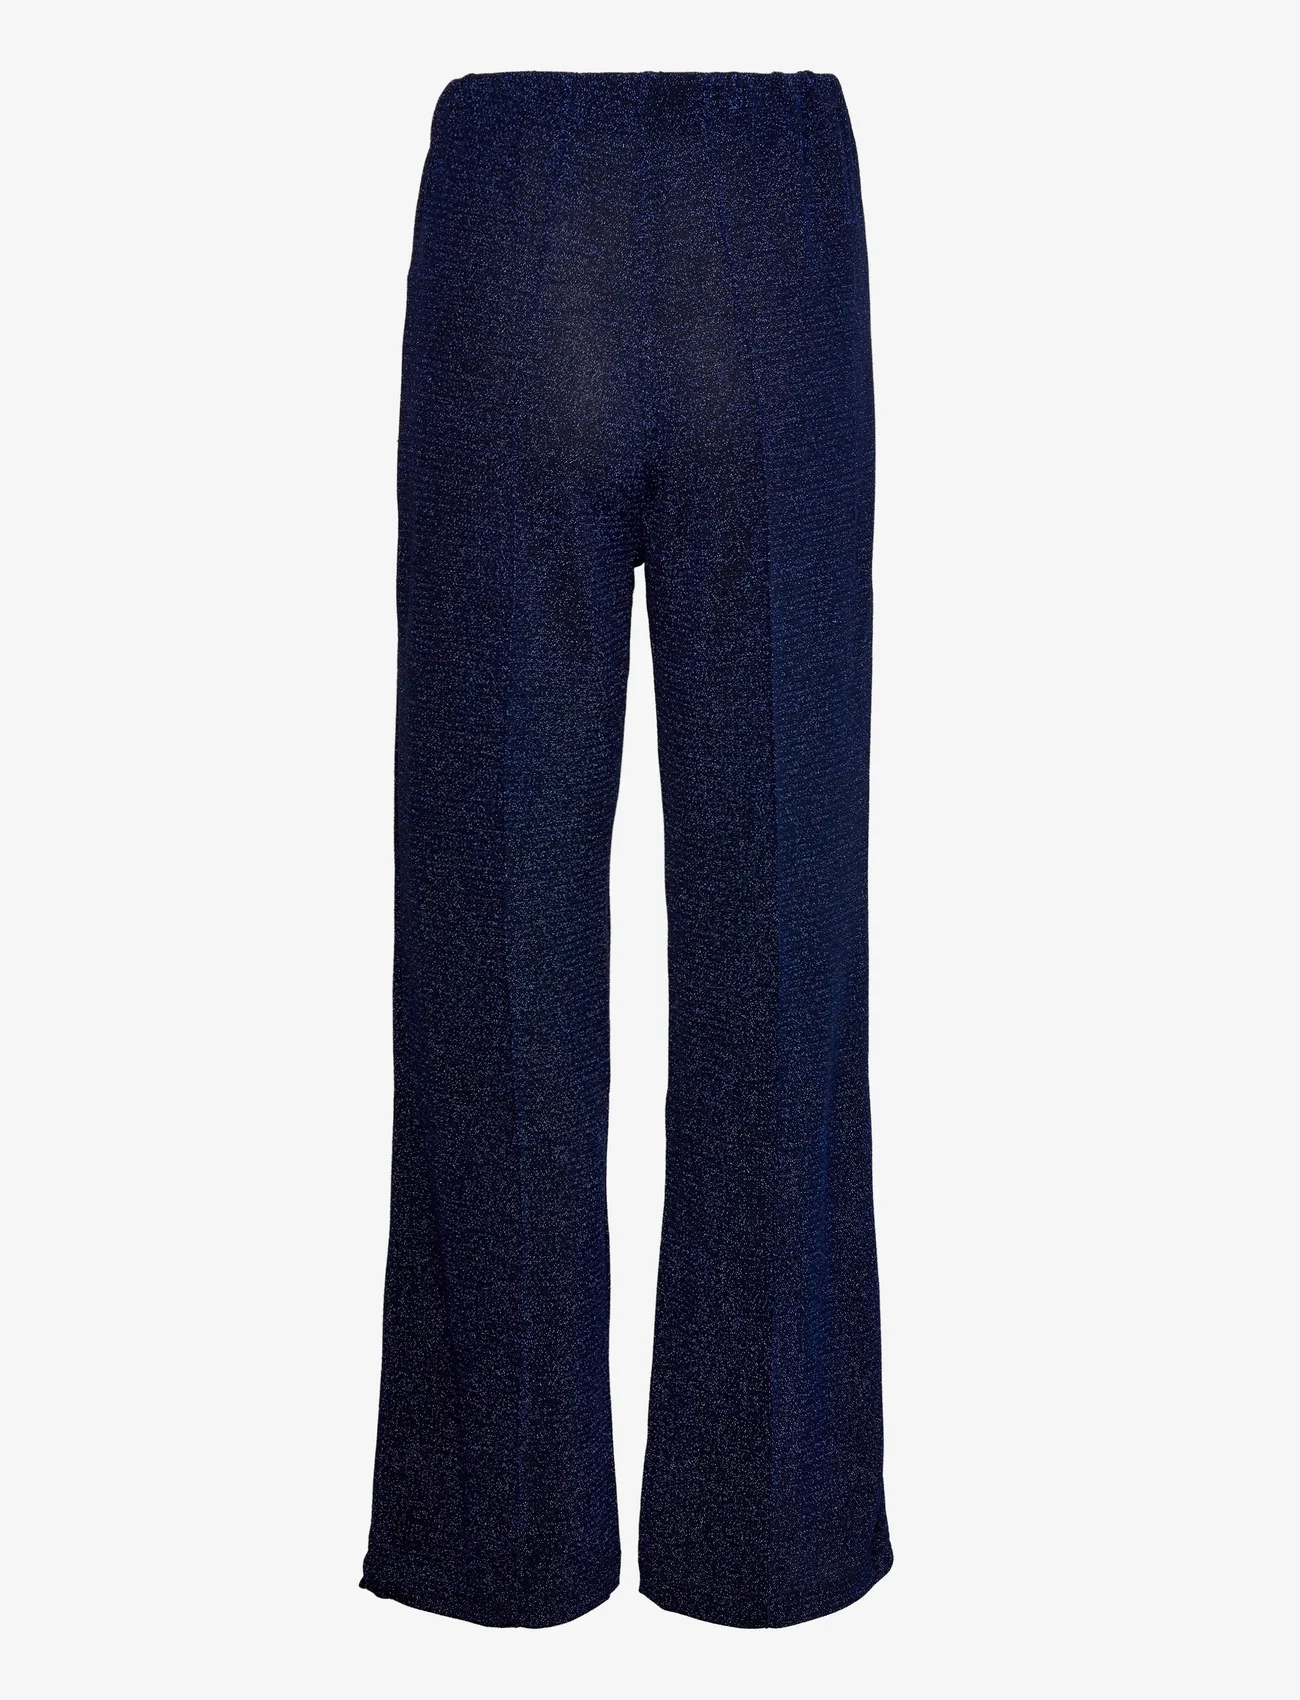 Lollys Laundry - Chile Pants - plačios kelnės - dark blue - 1